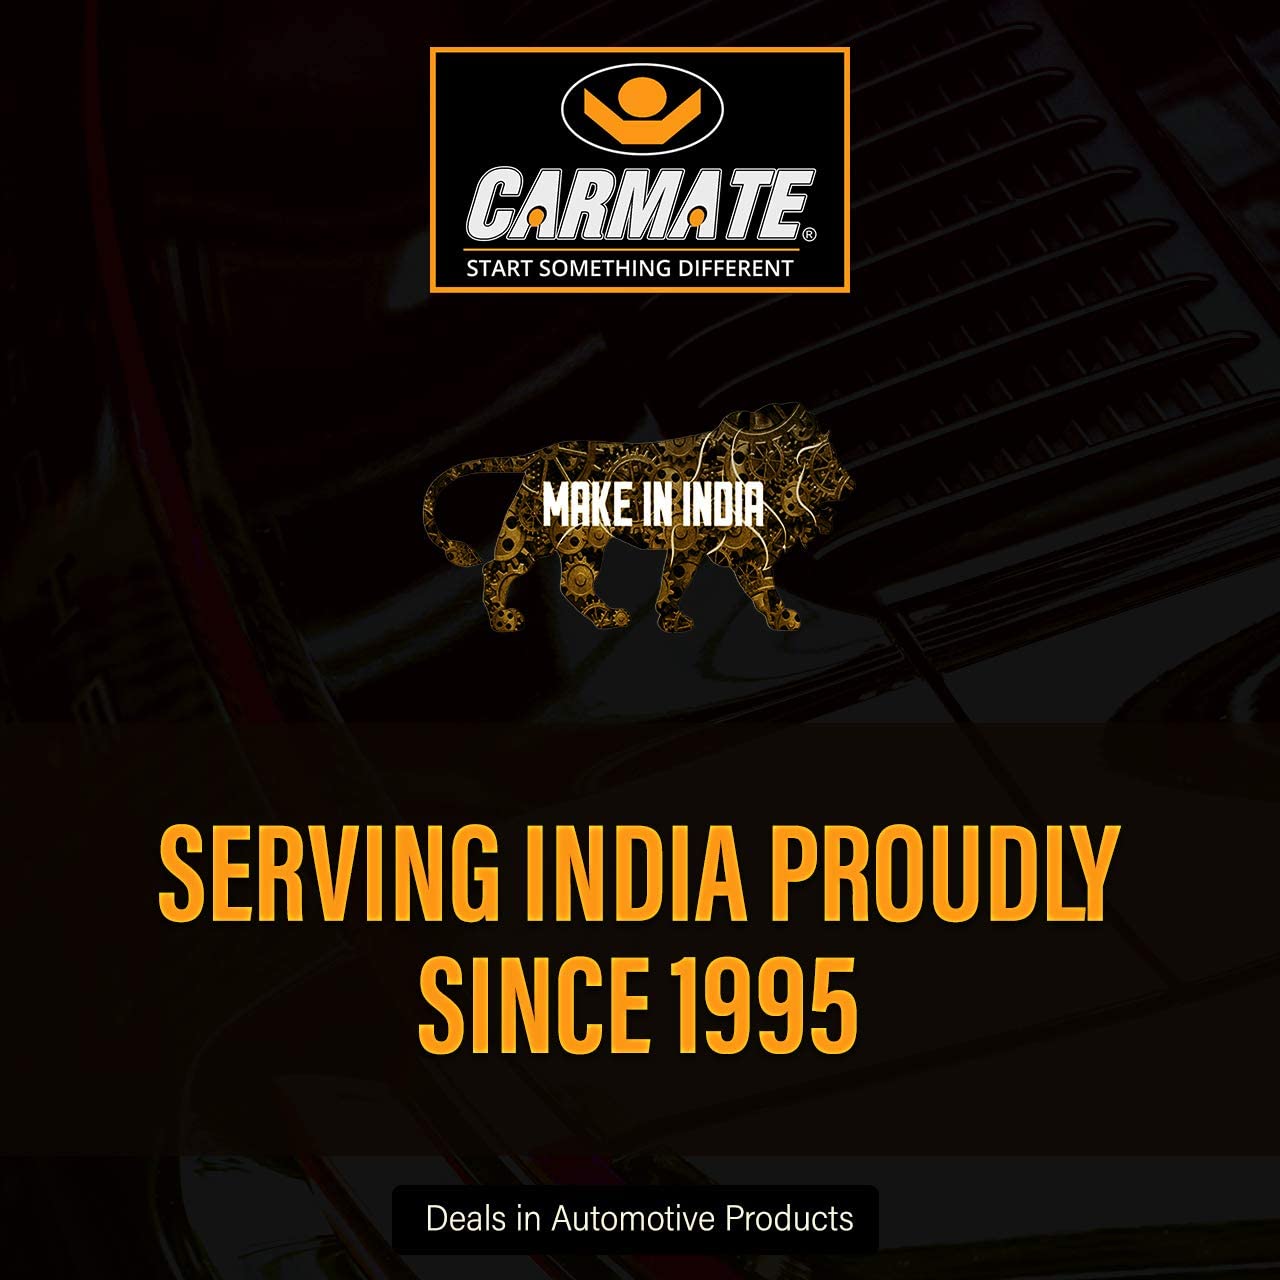 Carmate Passion Car Body Cover (Black and Orange) for Jaguar - XJ-L - CARMATE®